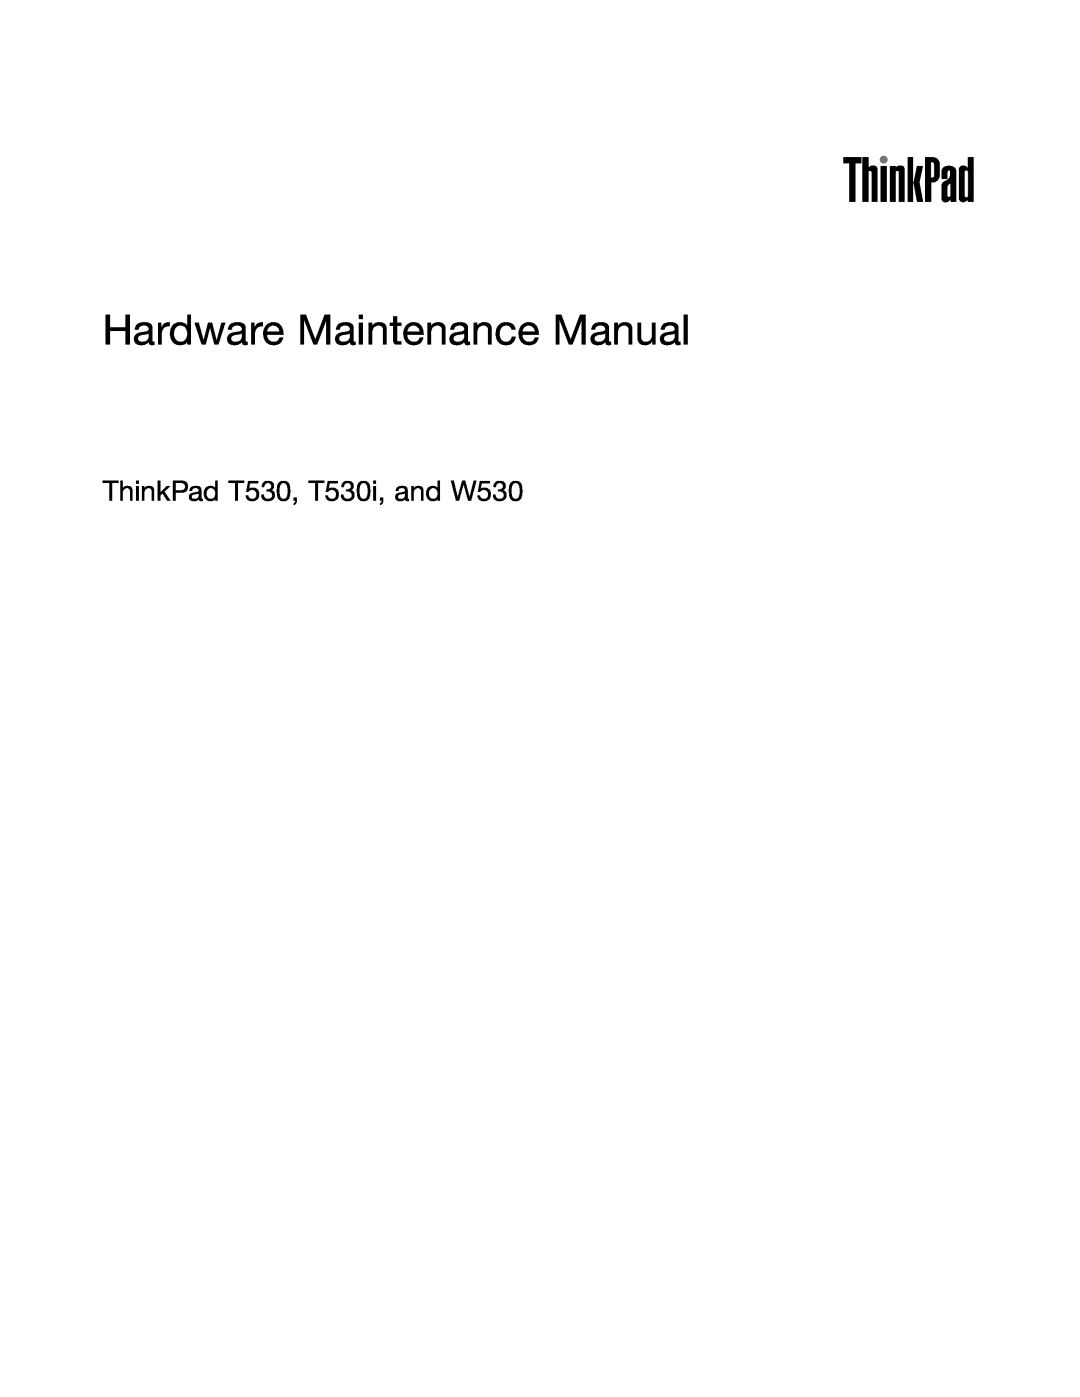 Lenovo 2394F1U, 244723U manual Hardware Maintenance Manual, ThinkPad T530, T530i, and W530 